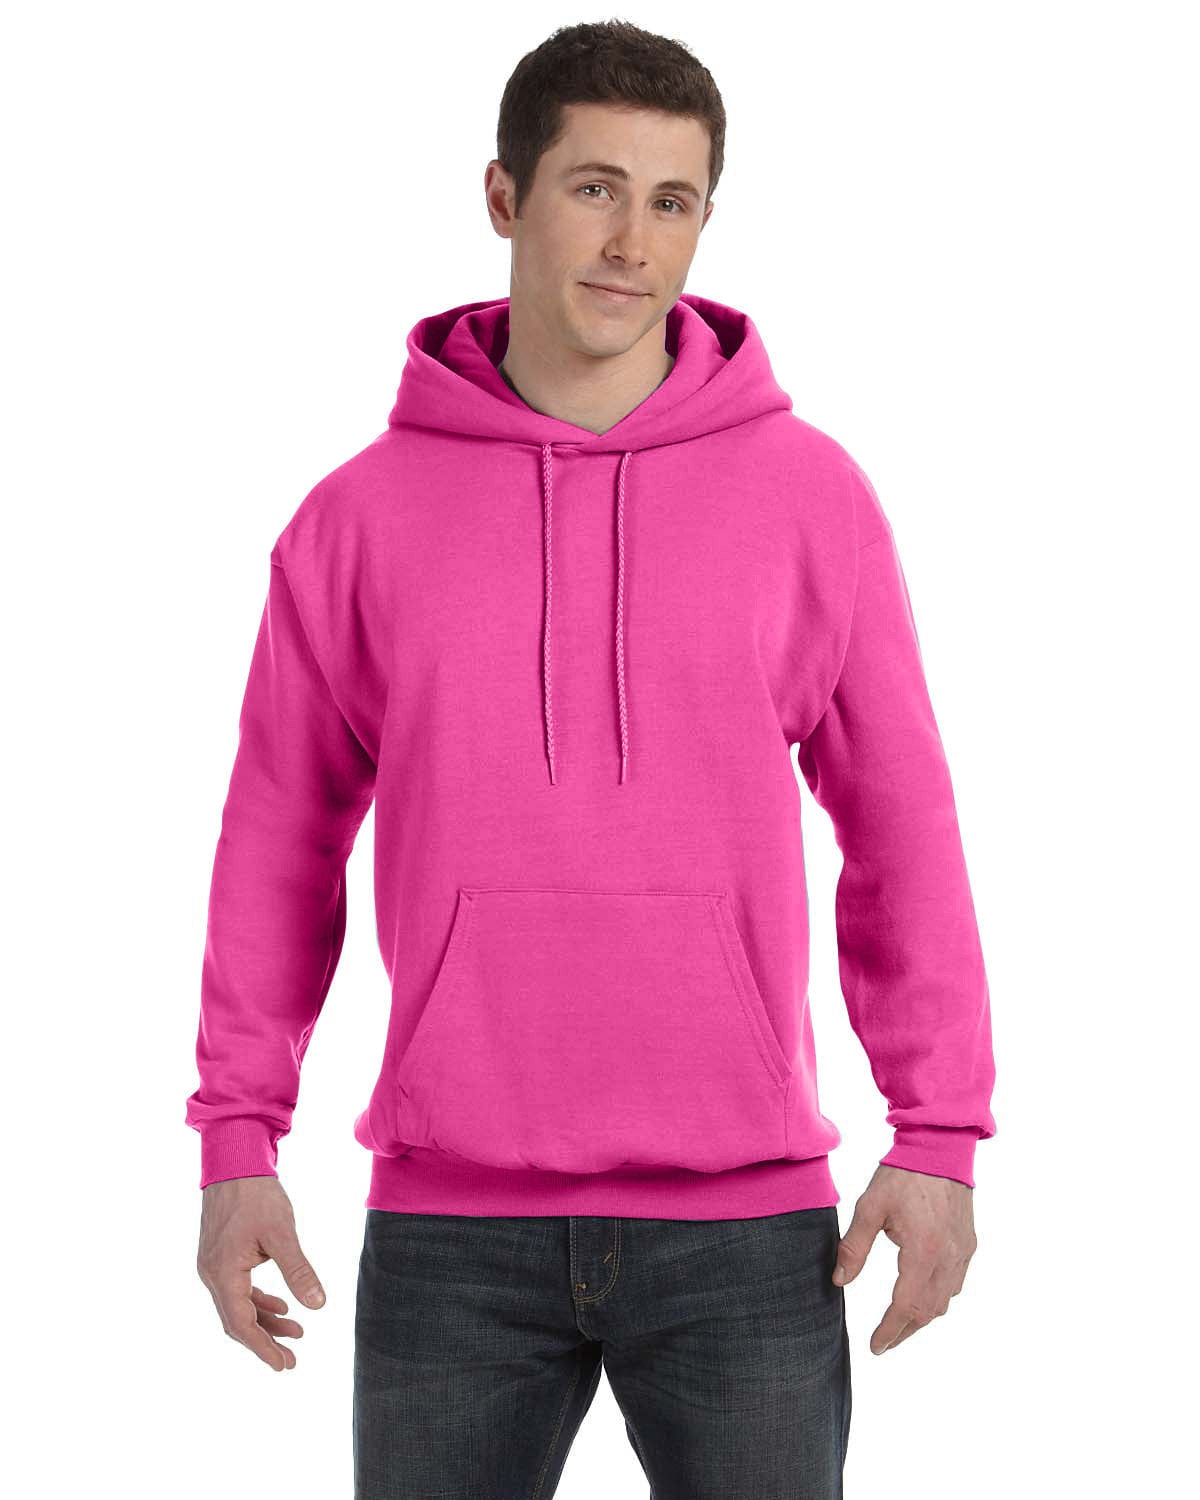 Custom Printed Hanes - Ecosmart® Hooded Sweatshirt - P170